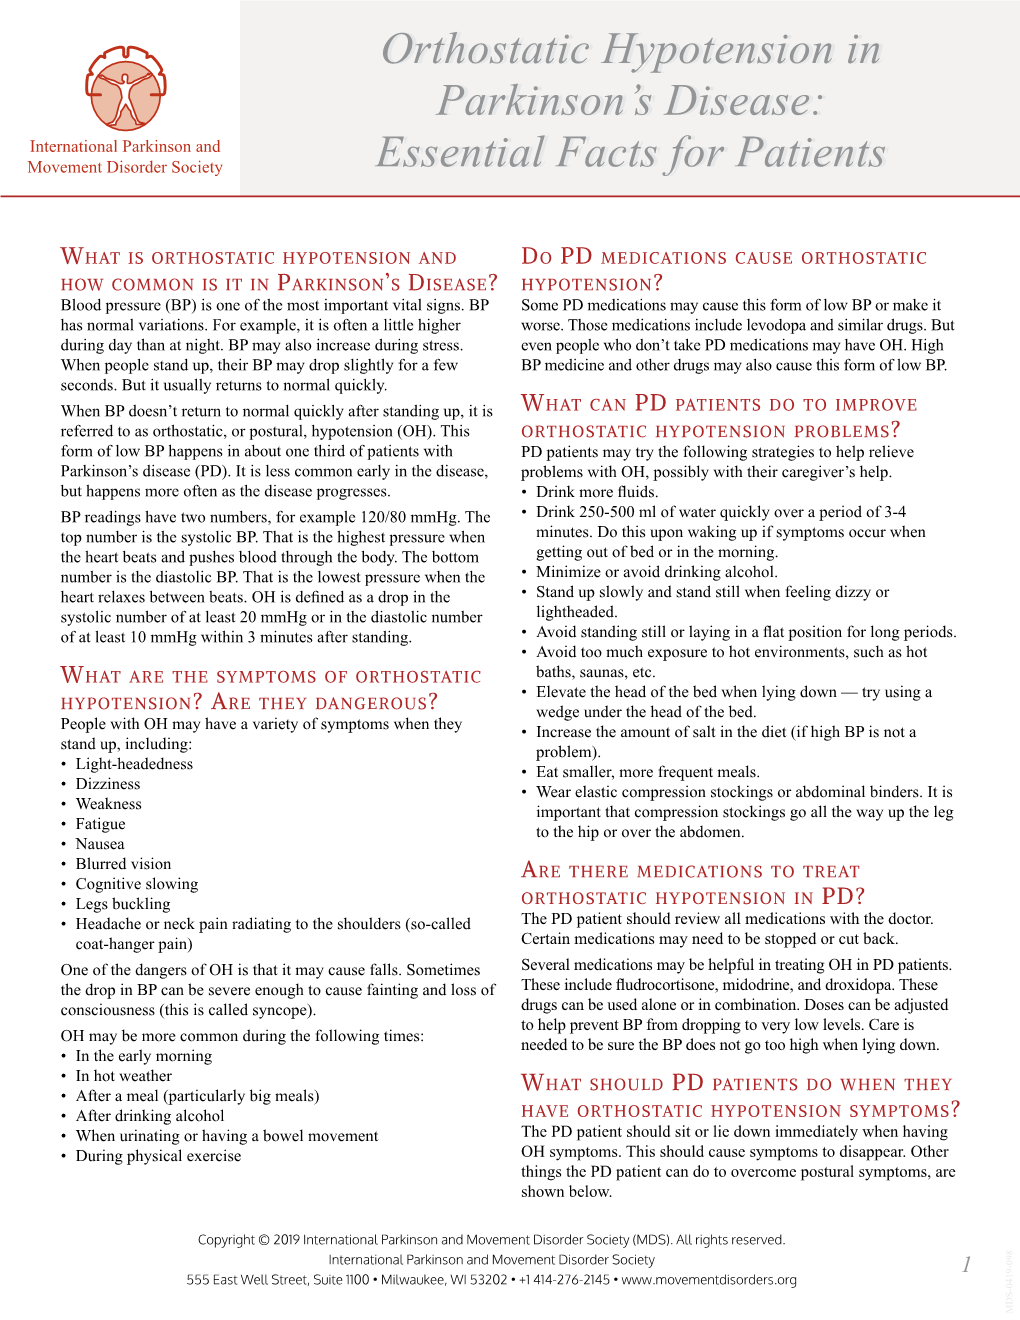 Orthostatic Hypotension in Parkinson's Disease